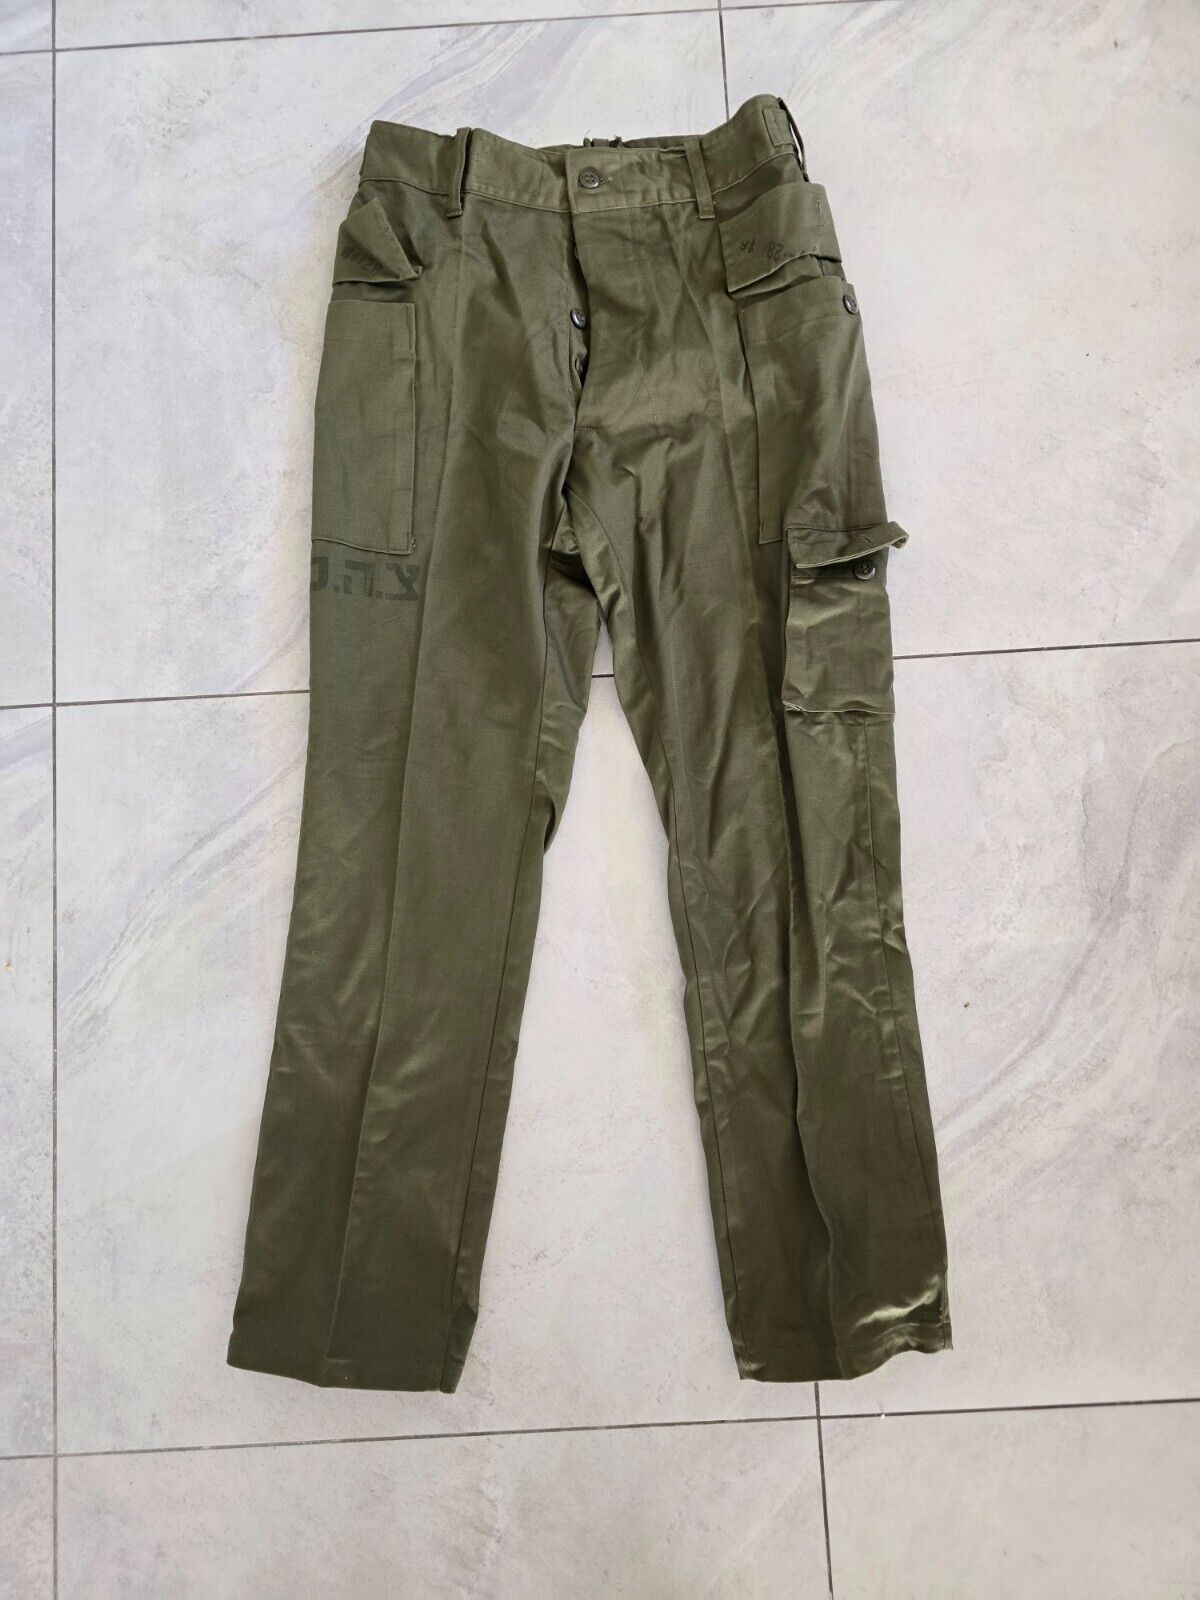 Genuine IDF  Israeli Army  Uniform Pants Size Small UNWORN With Insignia A225